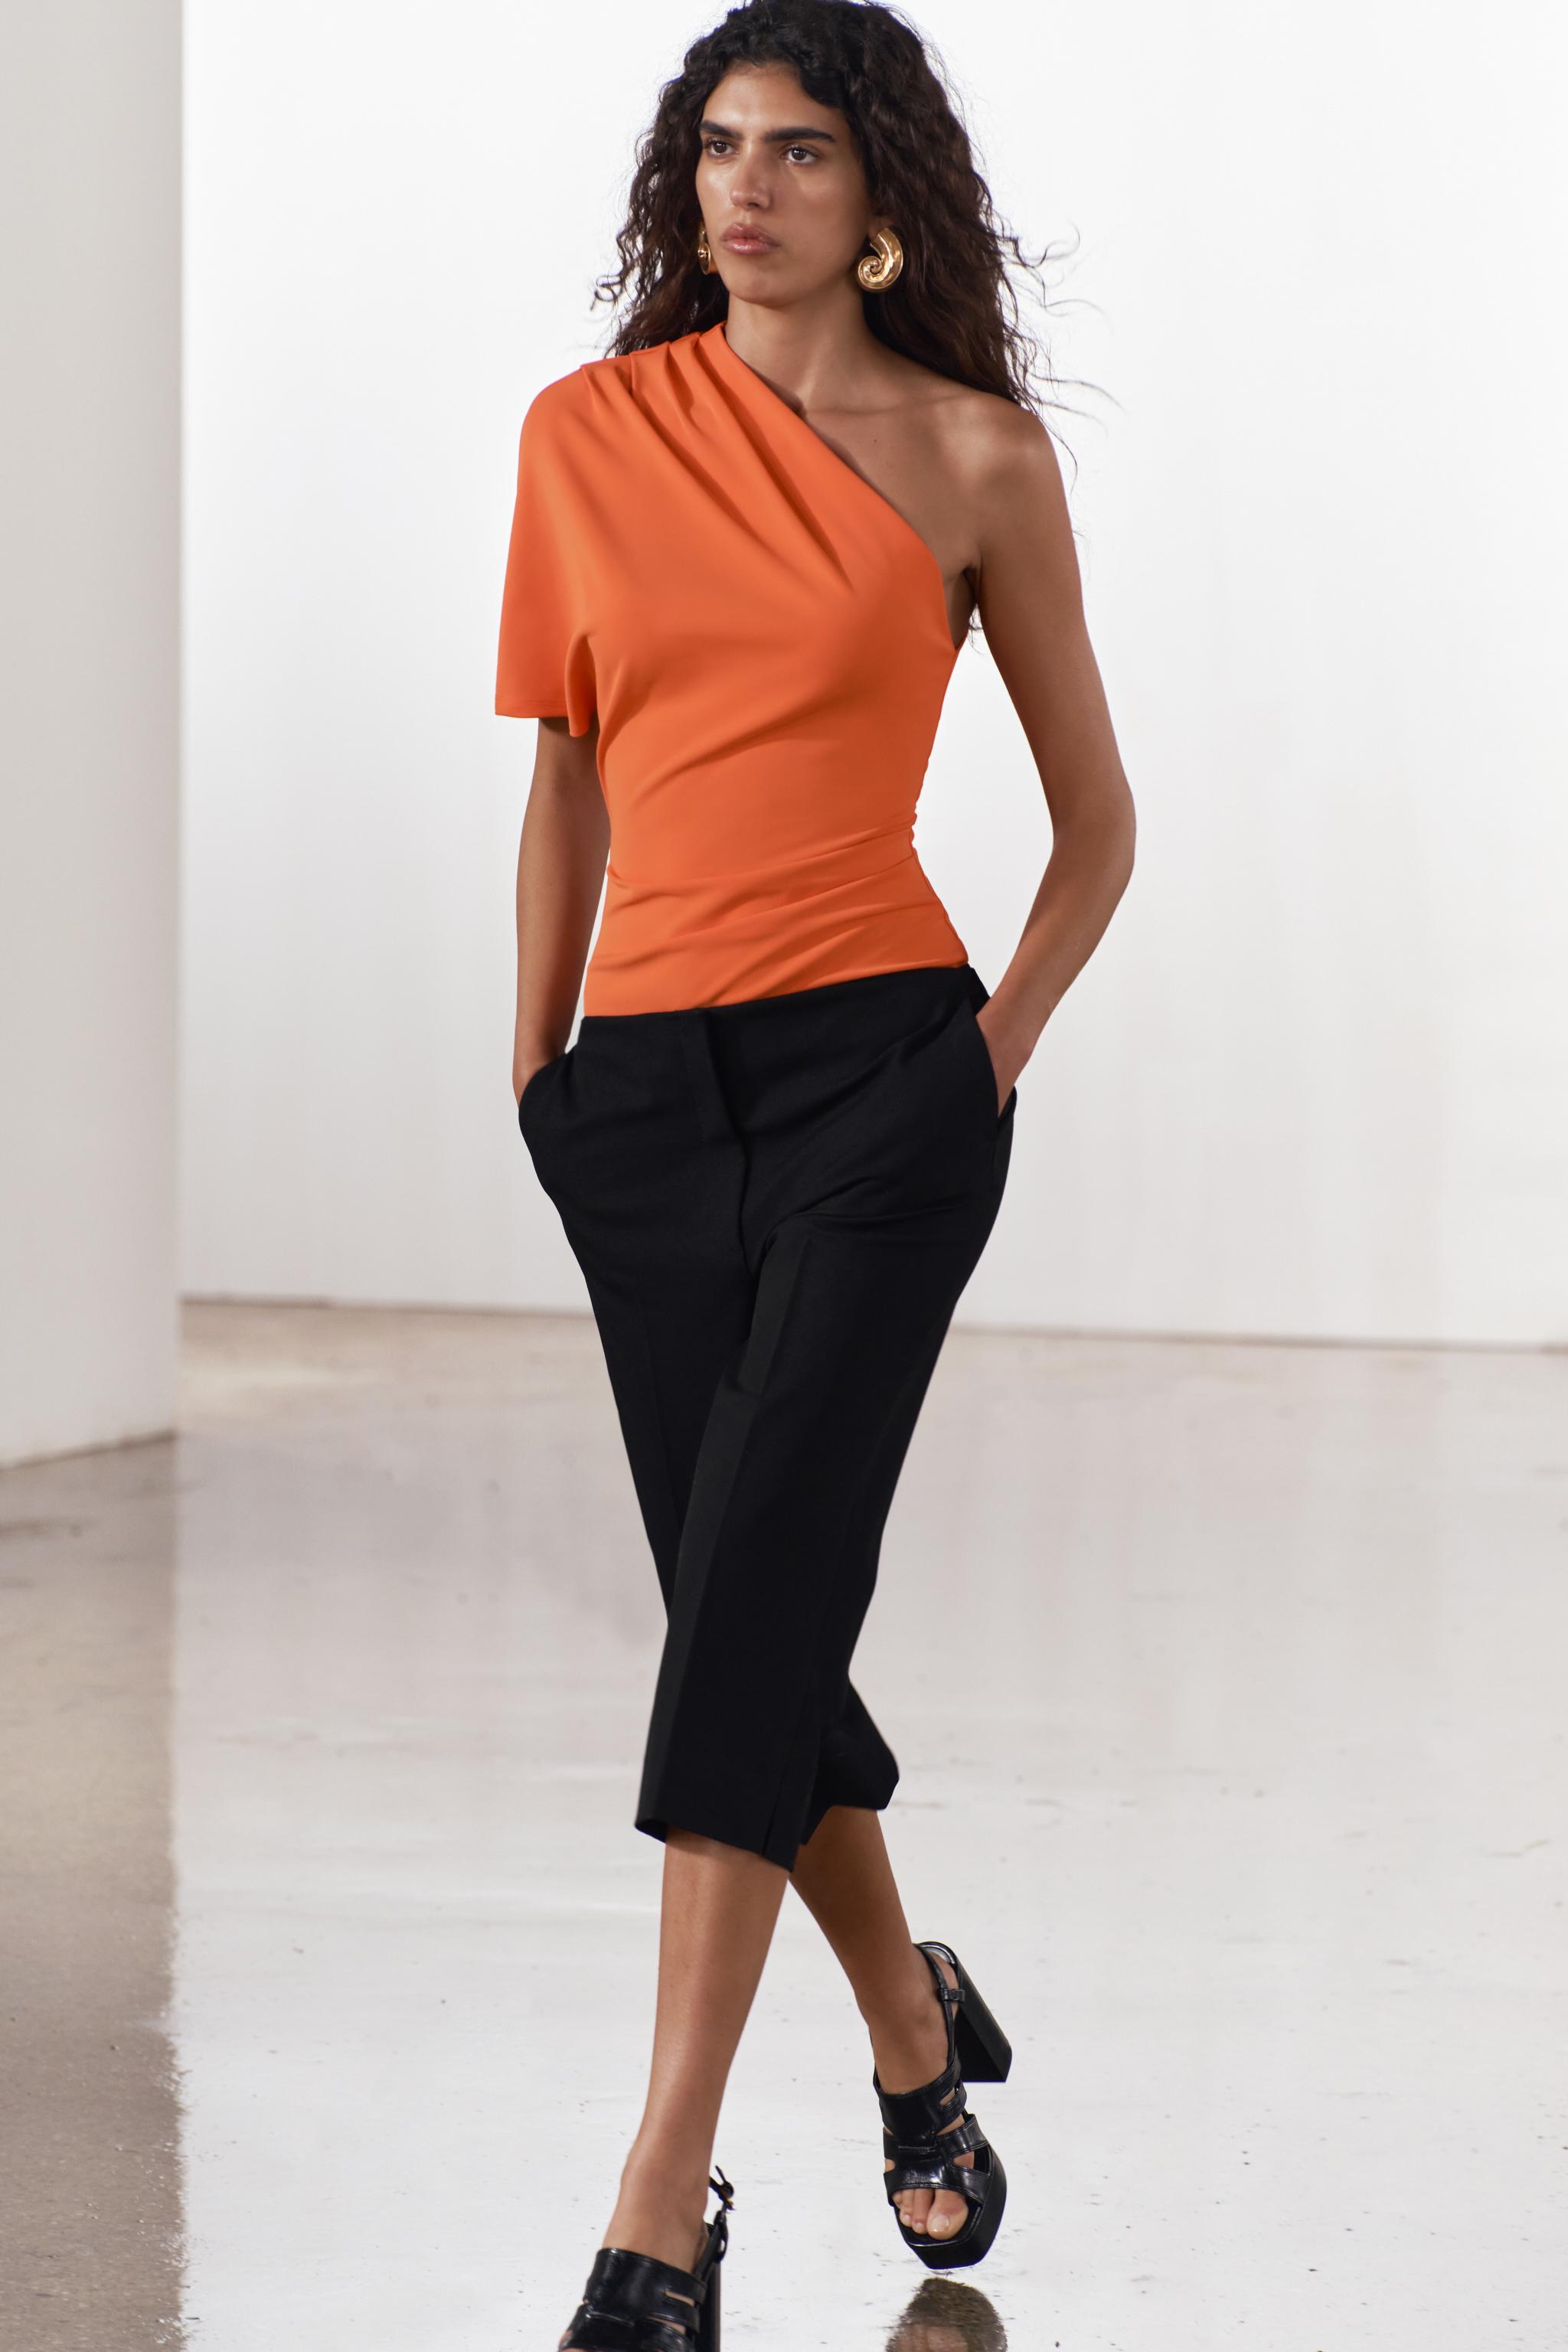 Women's Orange Tops, Explore our New Arrivals